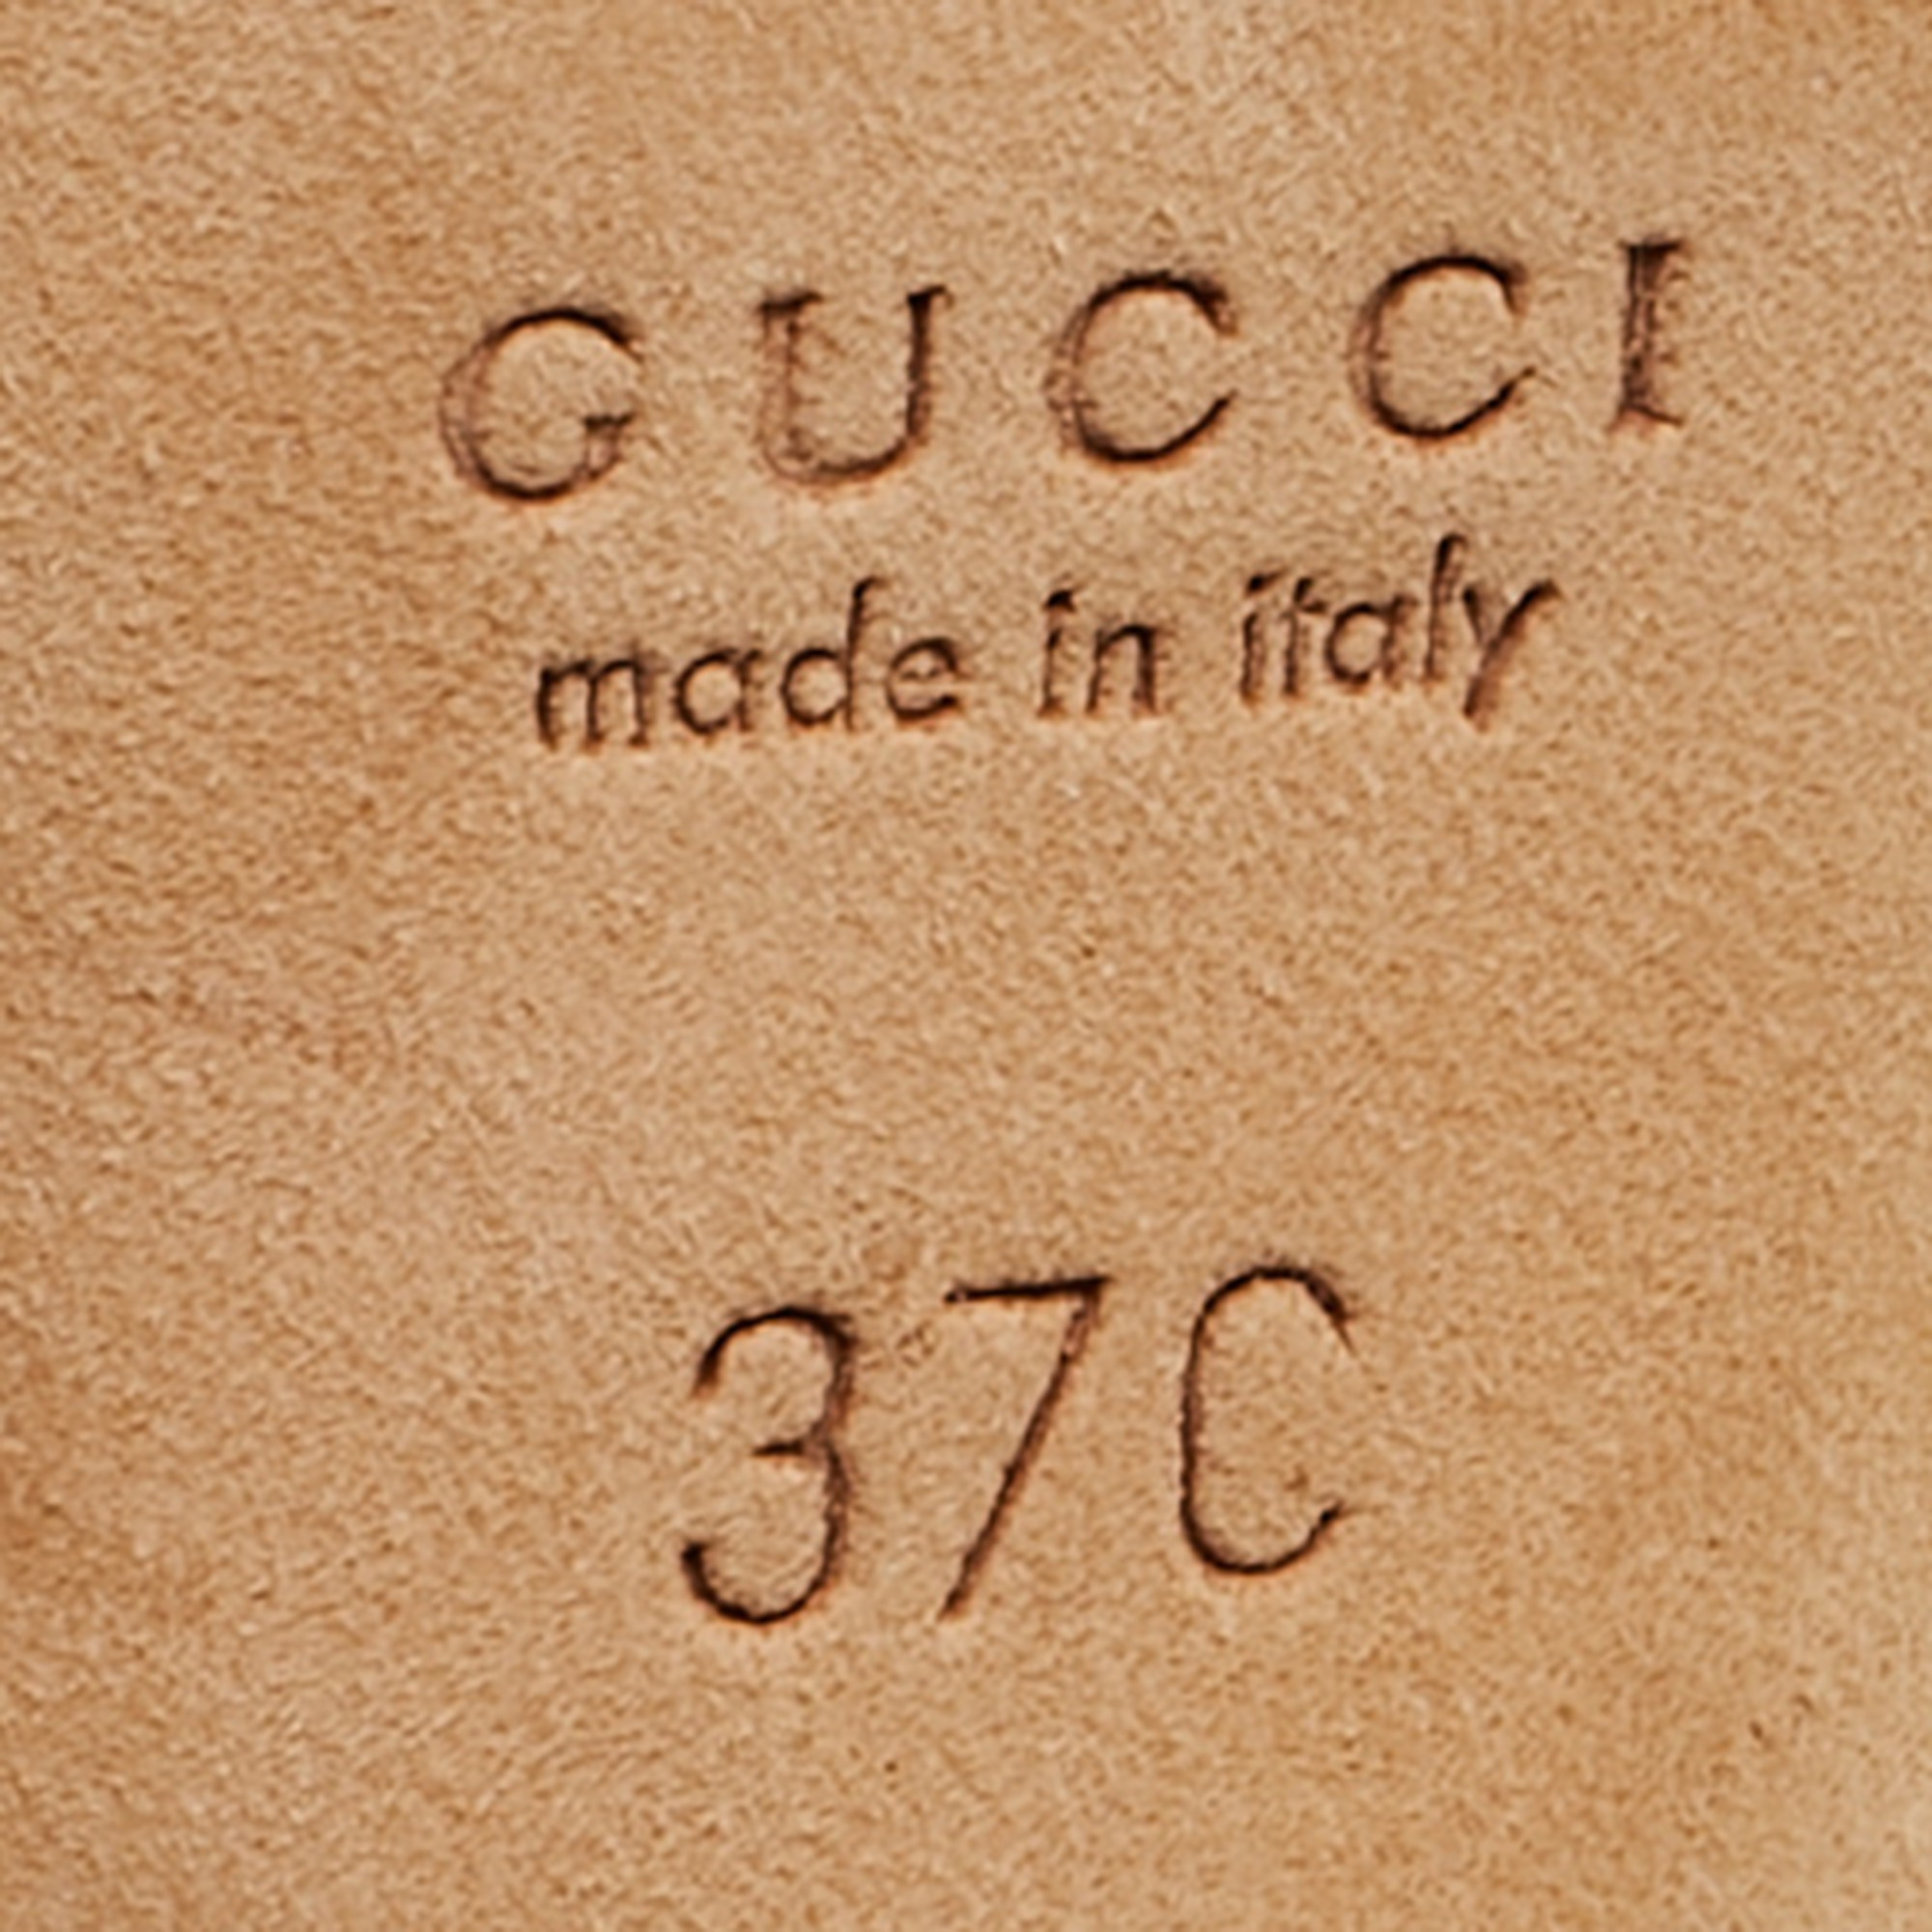 Gucci Metallic Leather Horsebit Slide Sandals Size 37